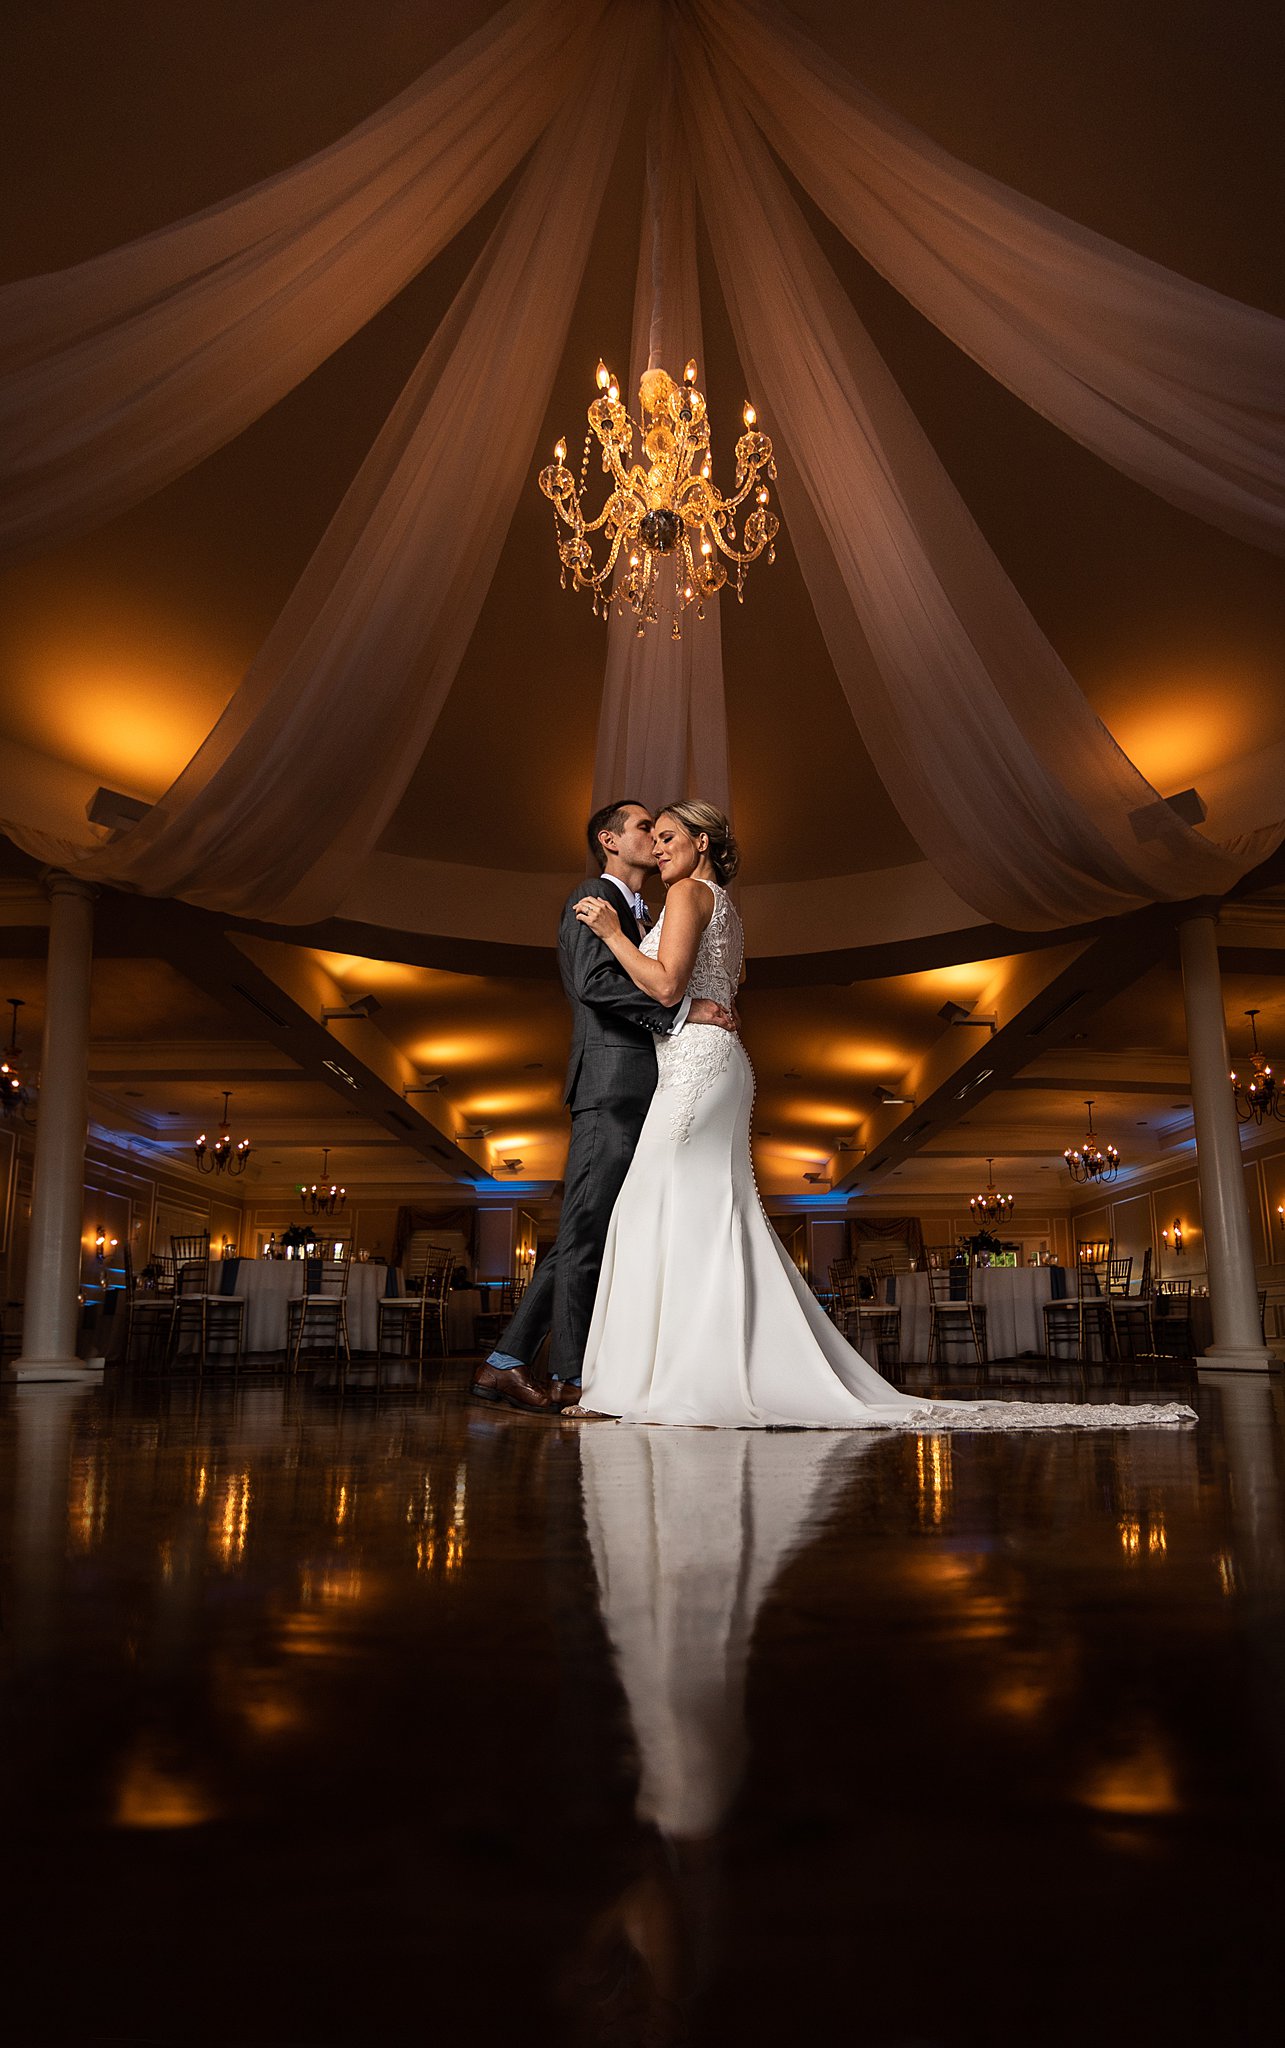 Newlyweds slow dance on an empty dance floor under a chandelier